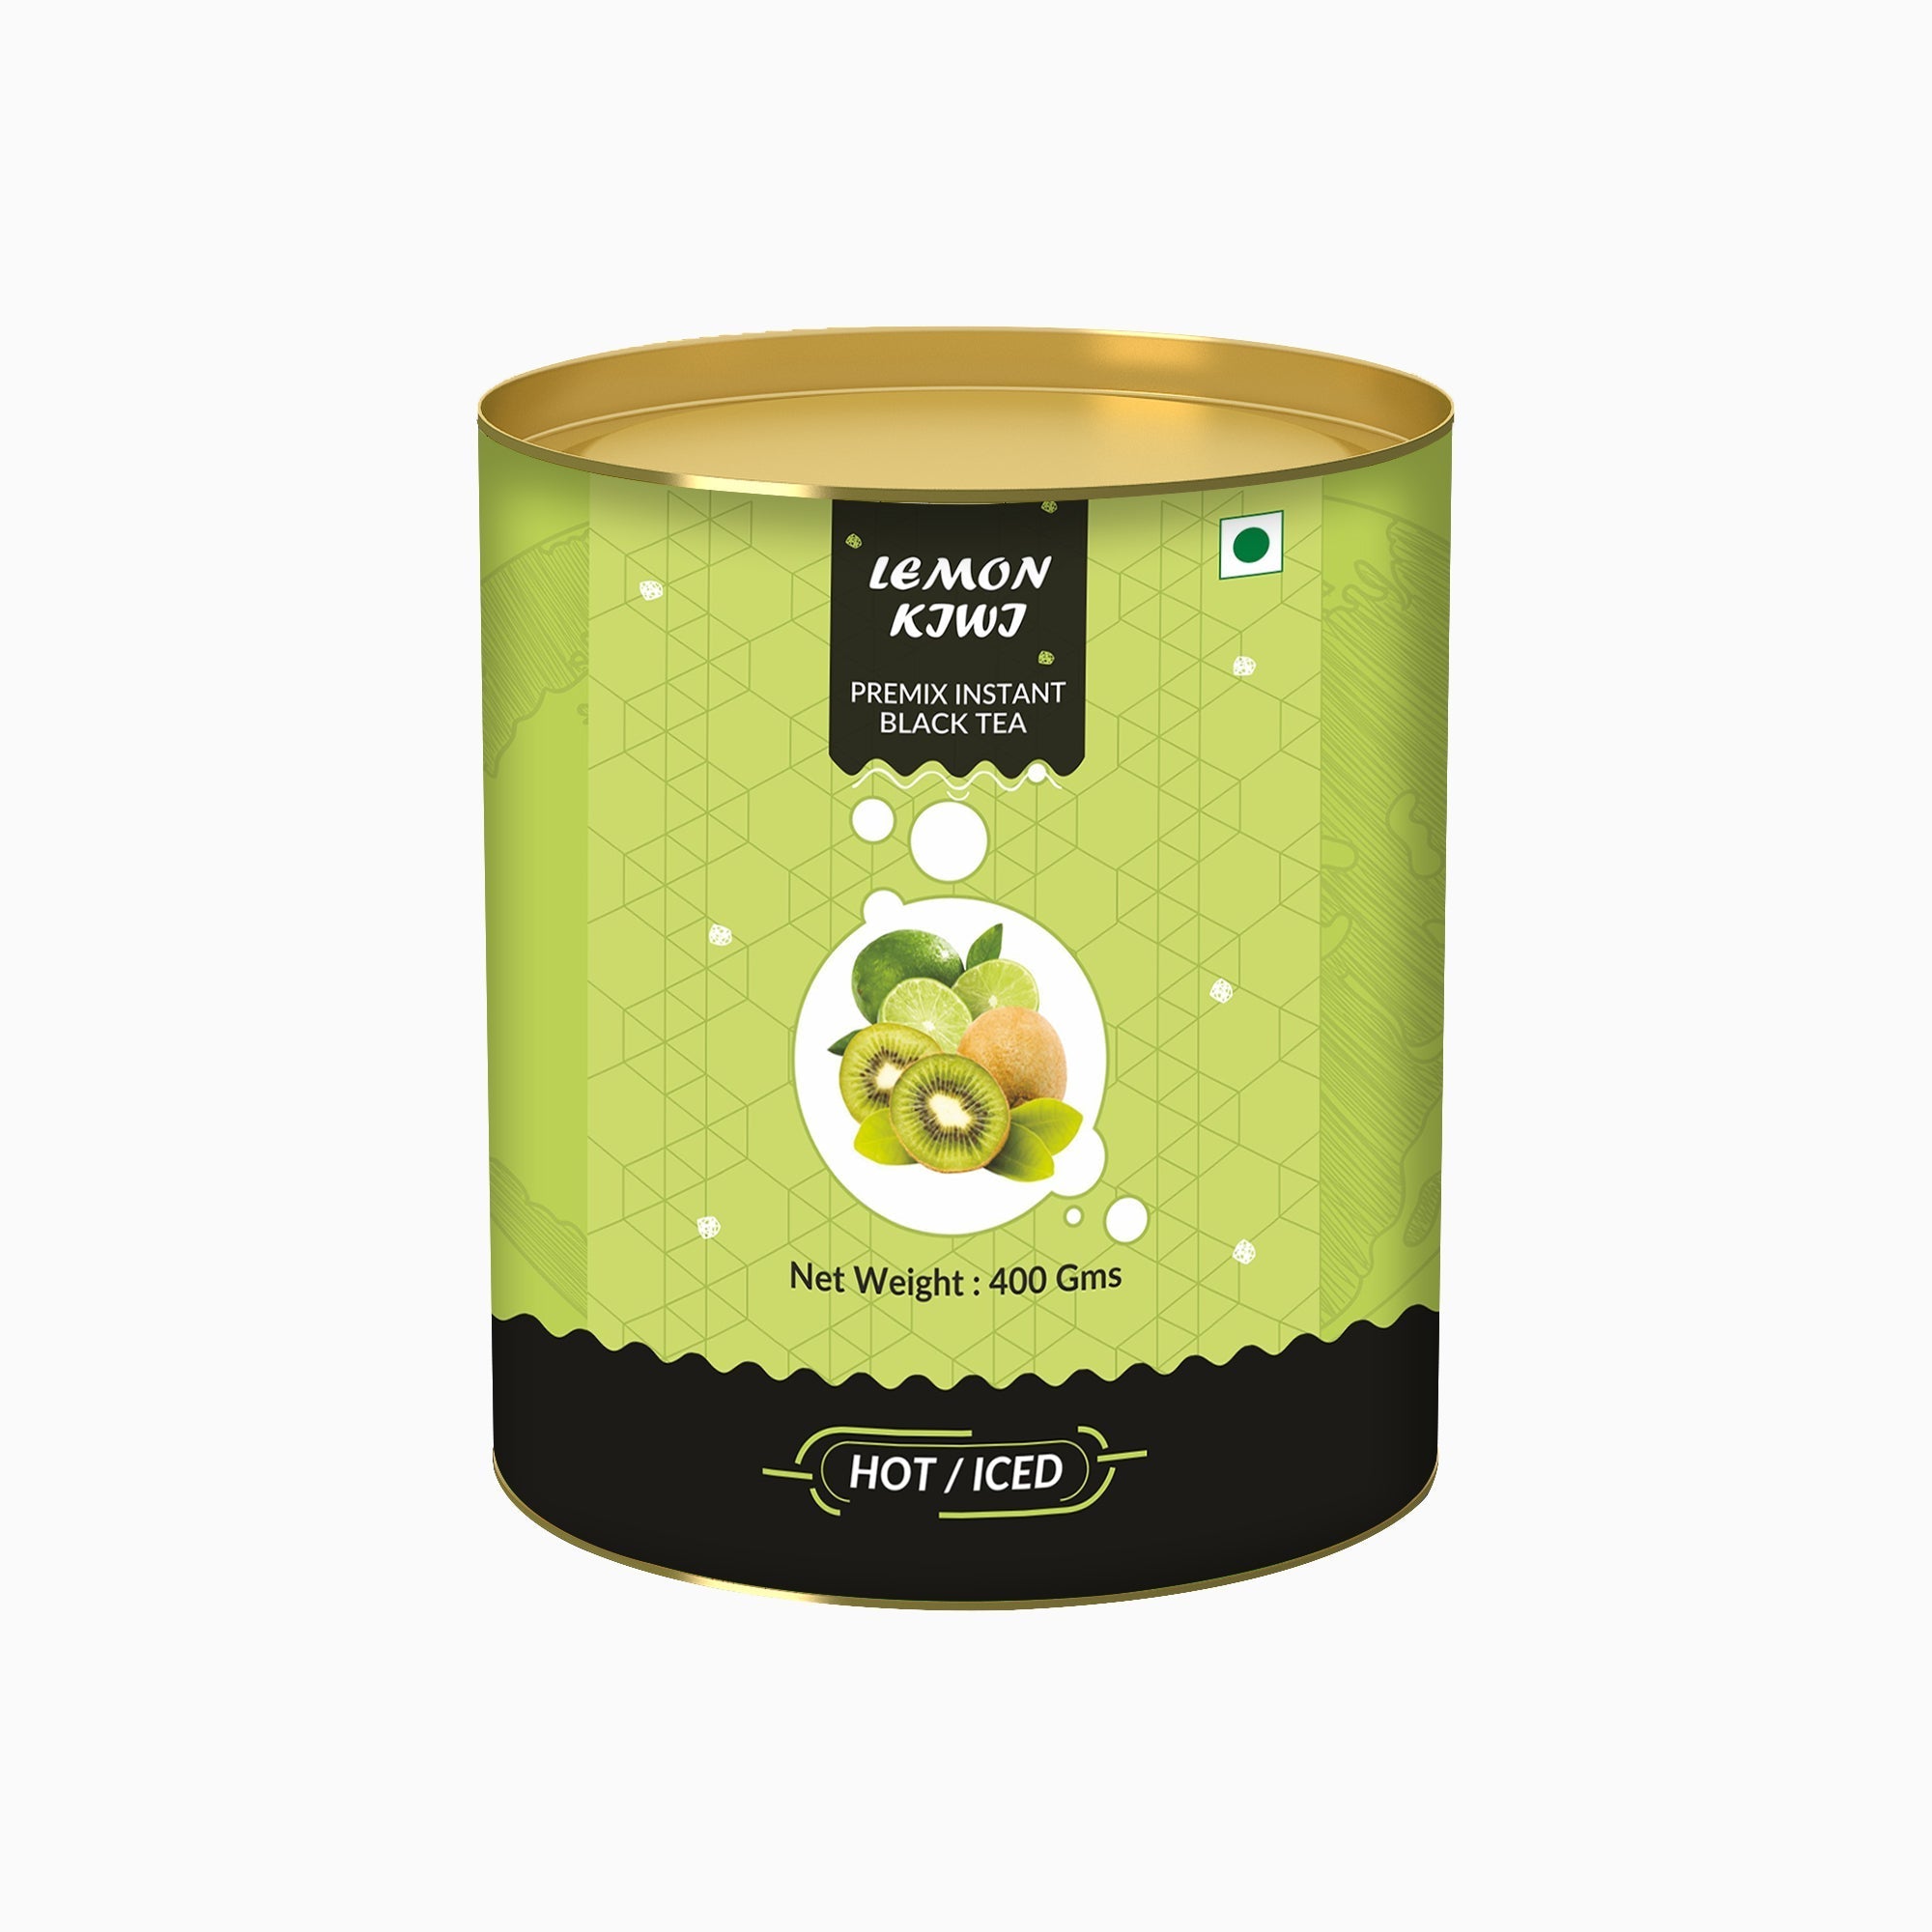 Lemon Kiwi Flavored Instant Black Tea - 400 gms